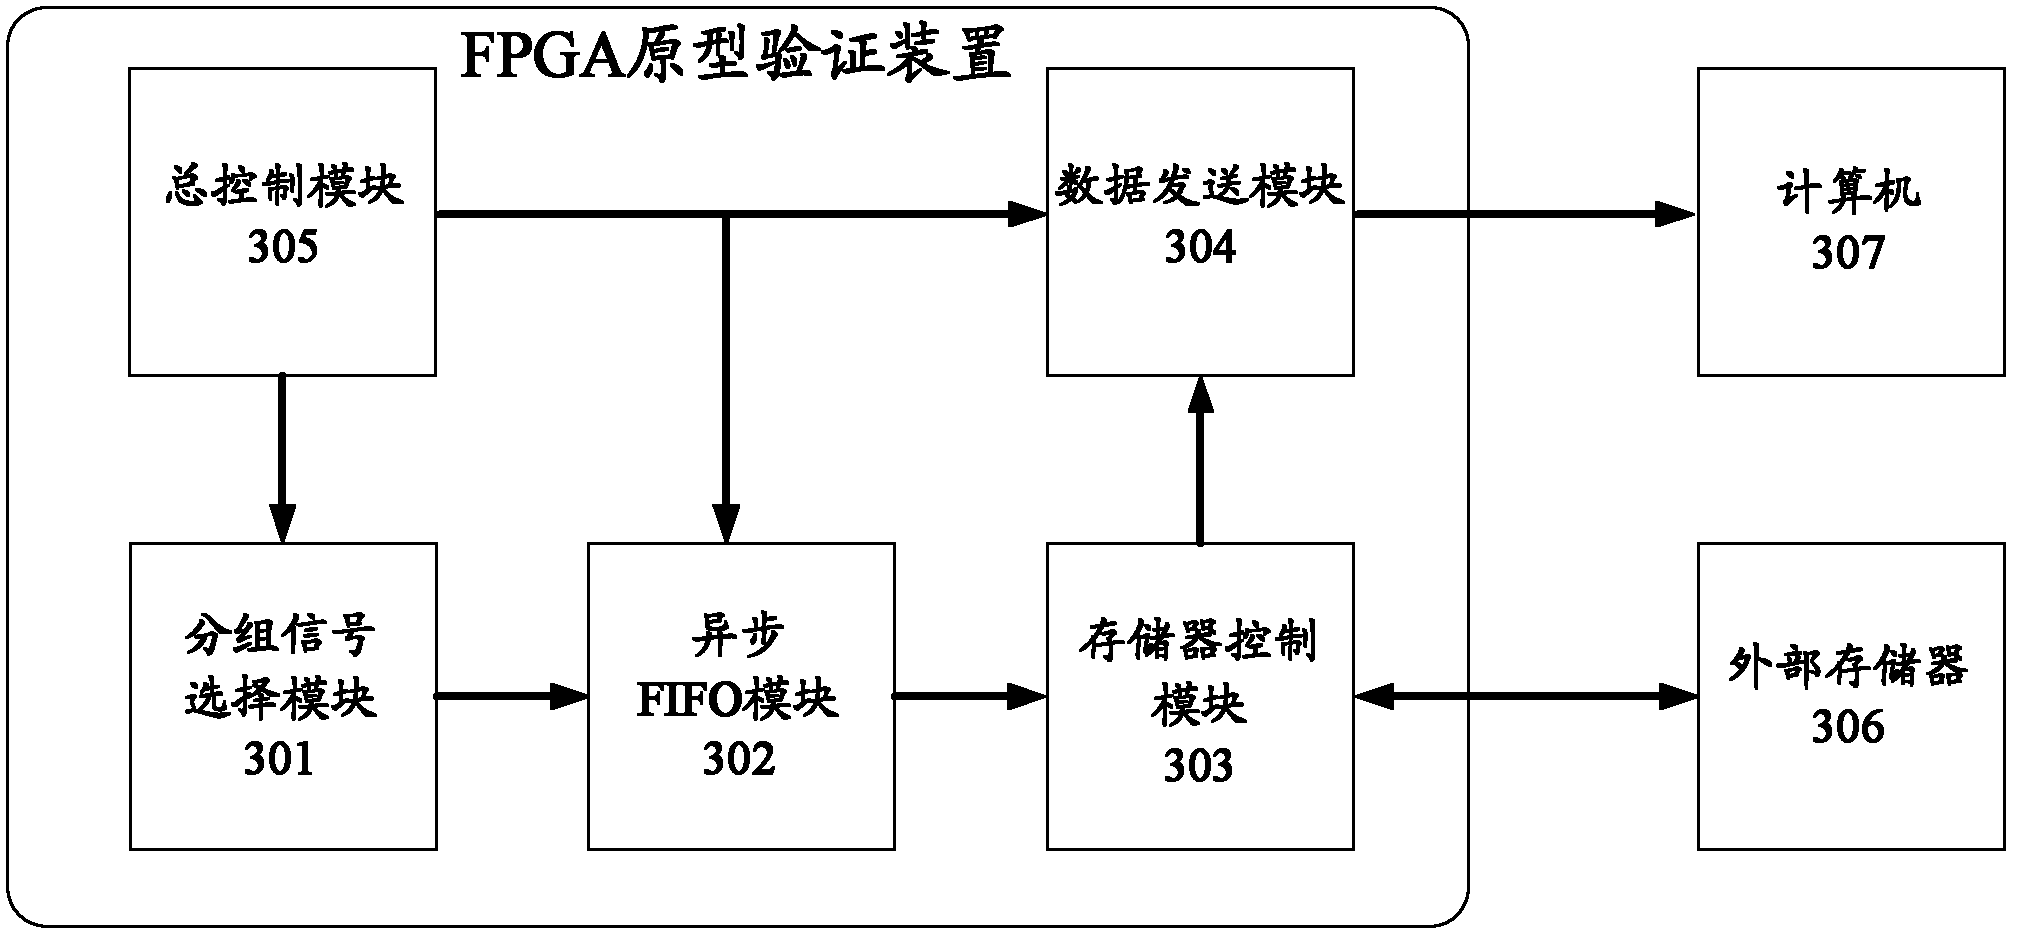 Field programmable gate array (FPGA) prototype verification device and method